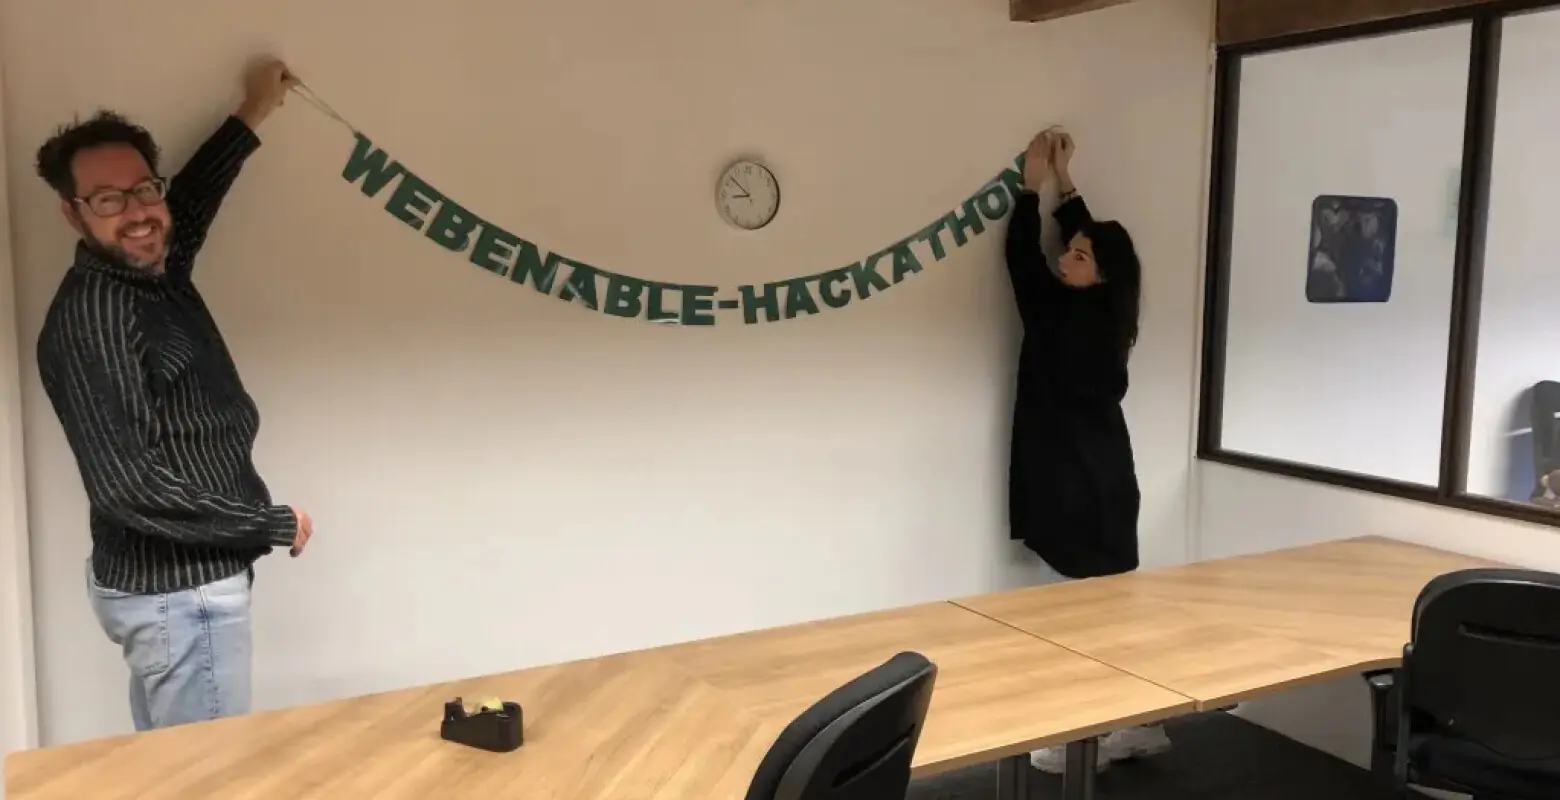 Webenable hackathon 2019